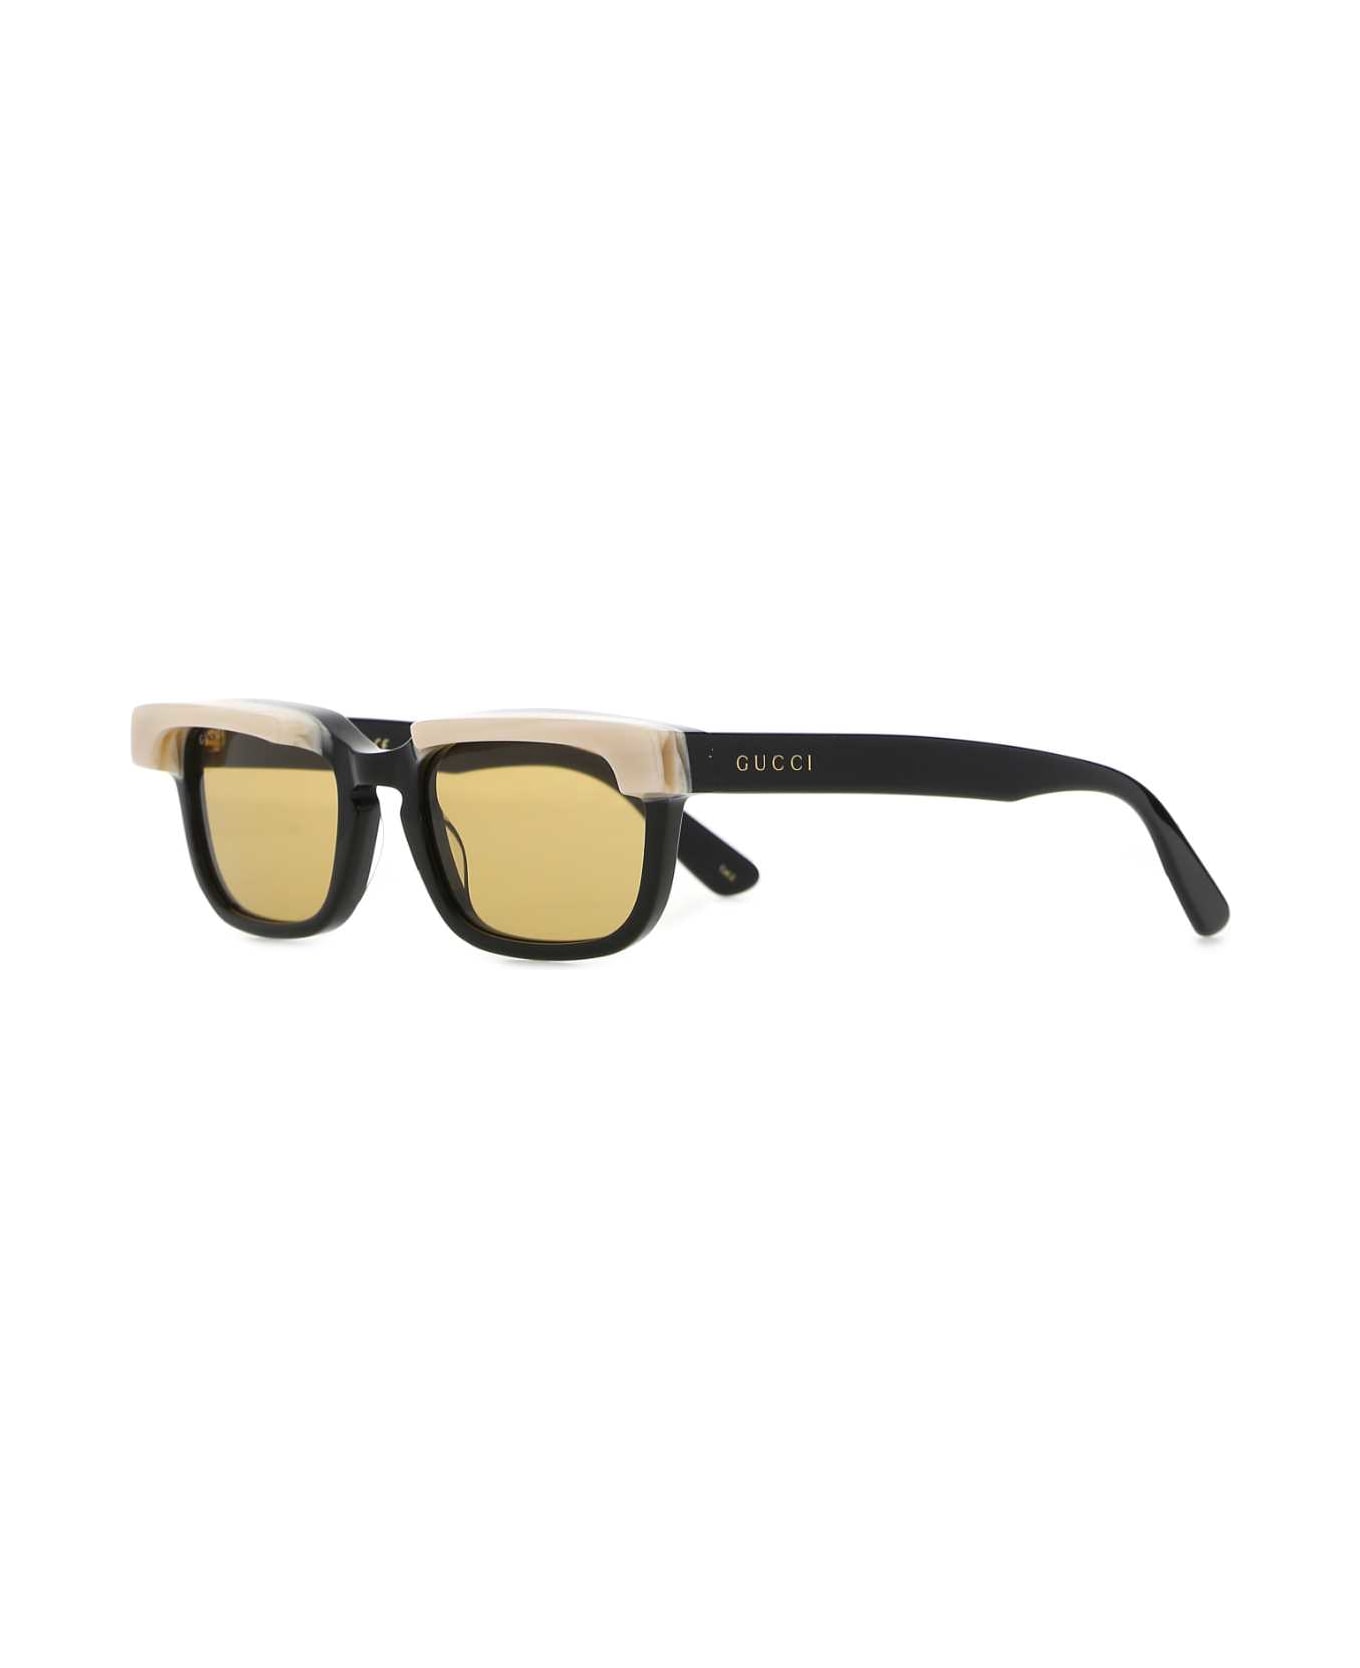 Gucci Black Acetate Sunglasses - 1070